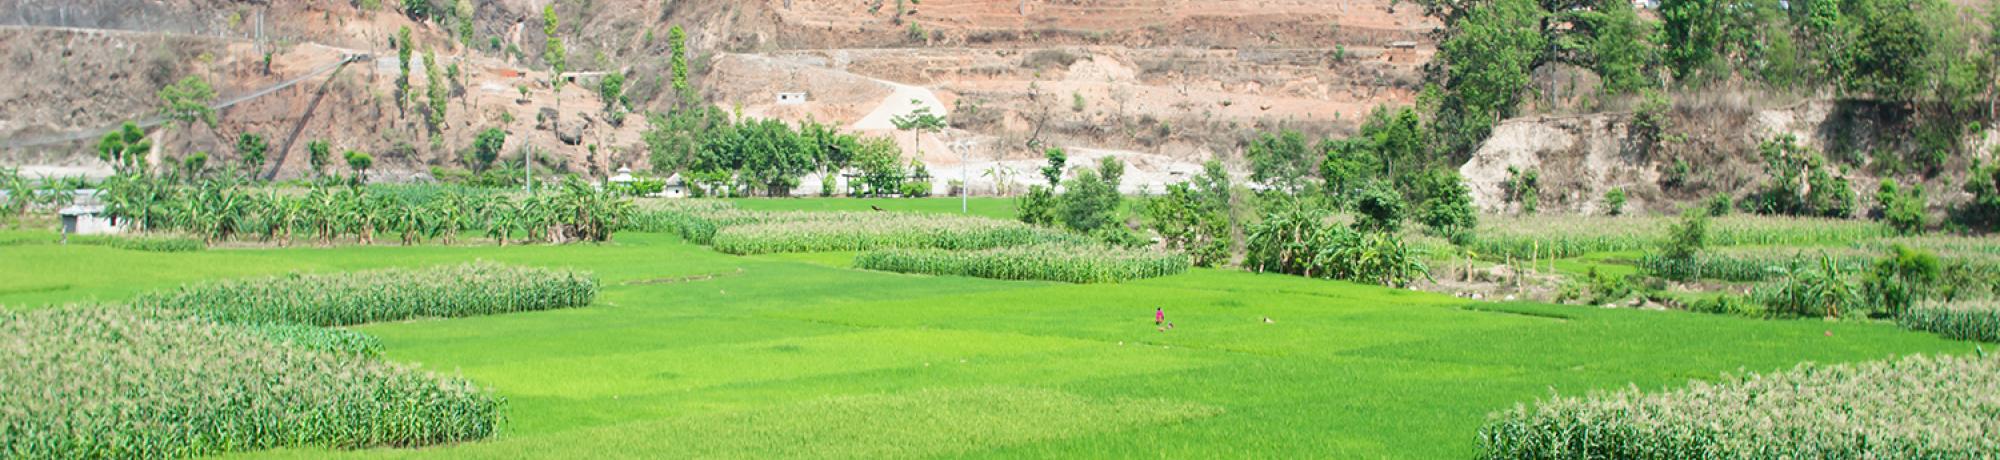 rice farm in Nepal